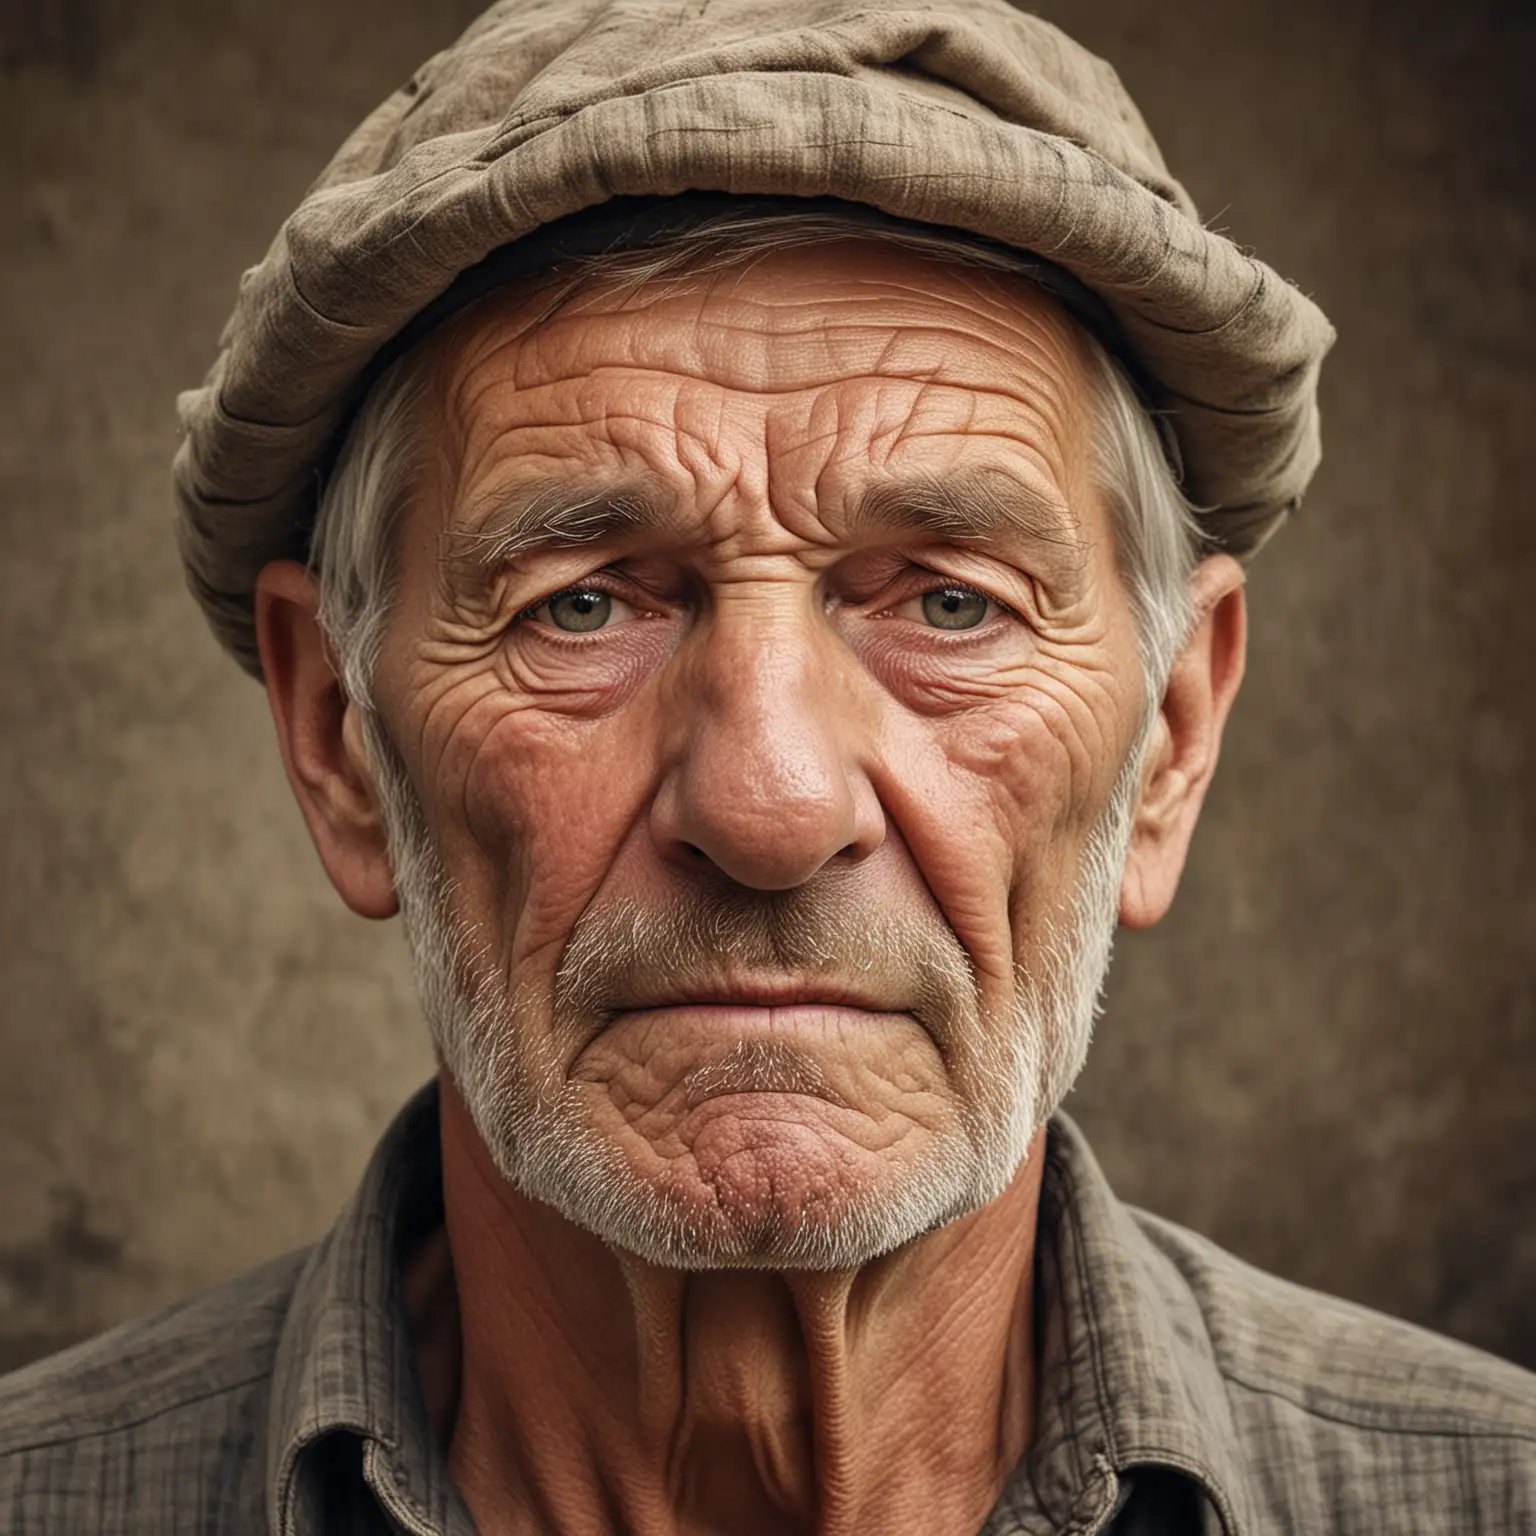 Mid European Elderly Farmer with Prominent Wrinkles and Bareheaded